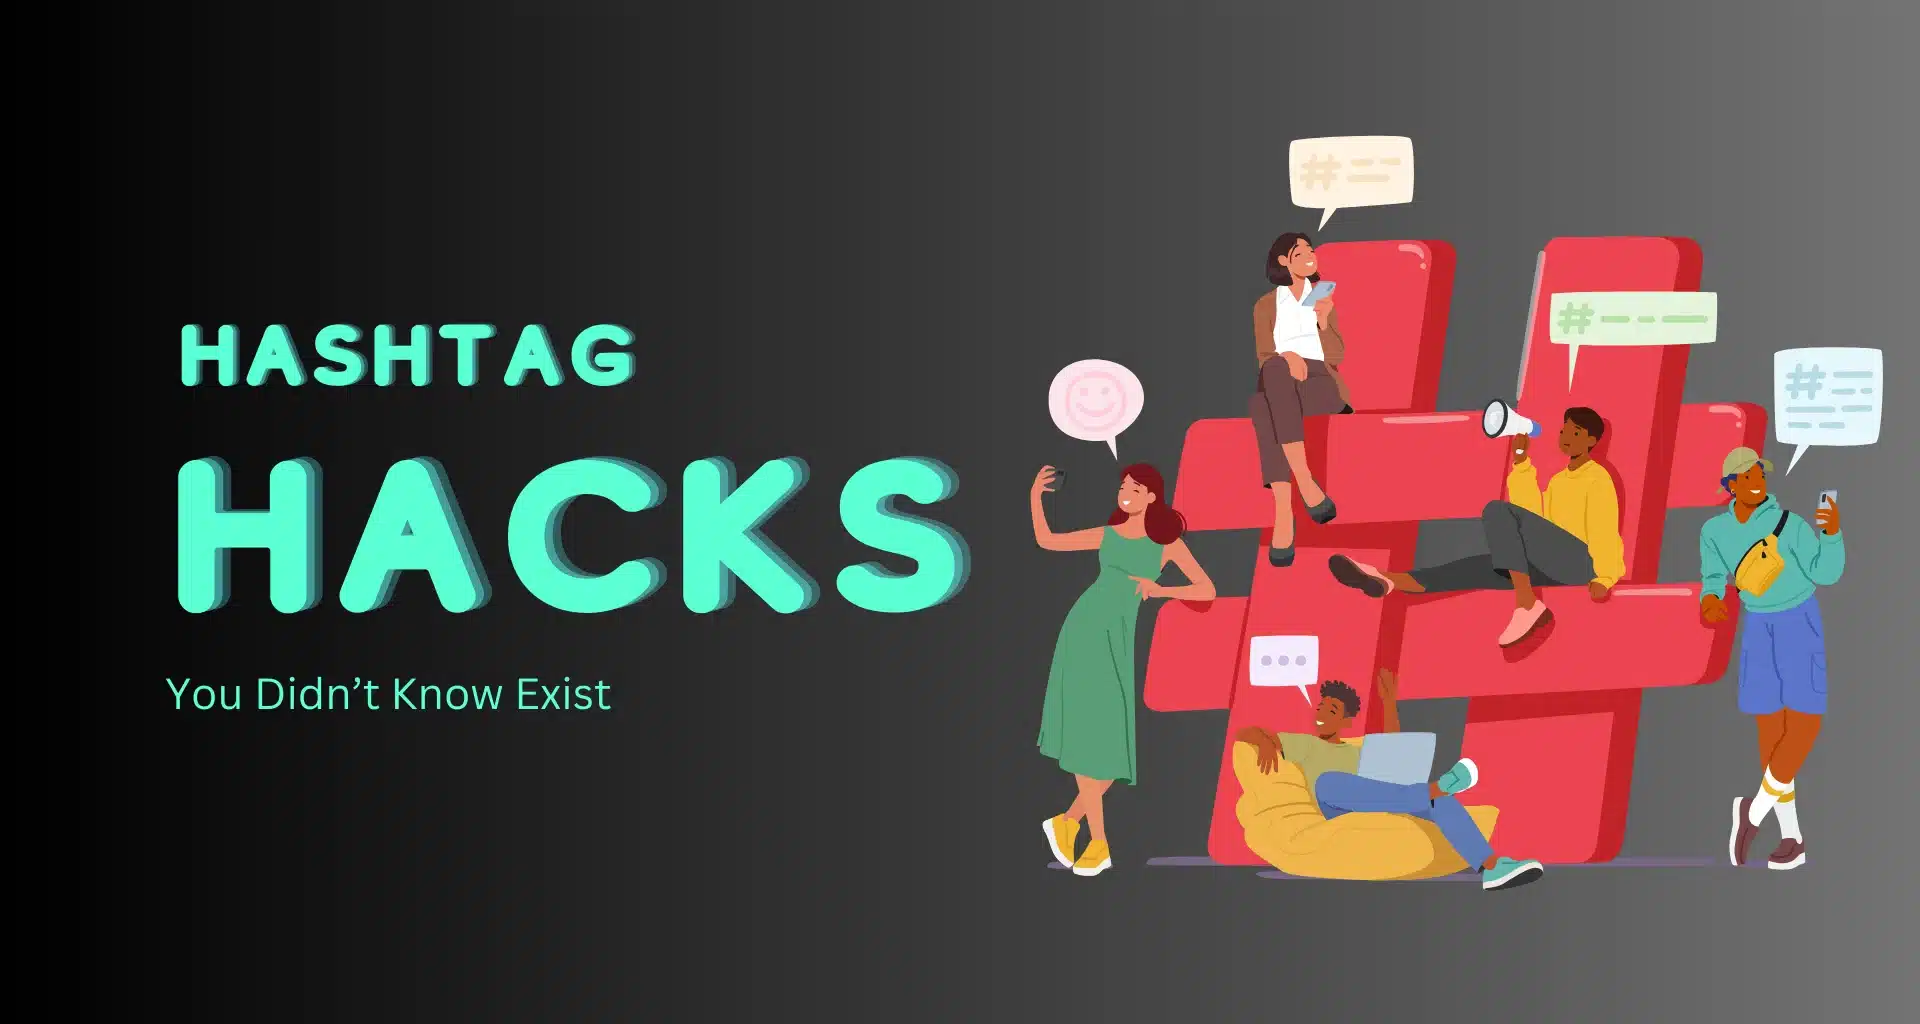 Hashtag hacks for instagram posts